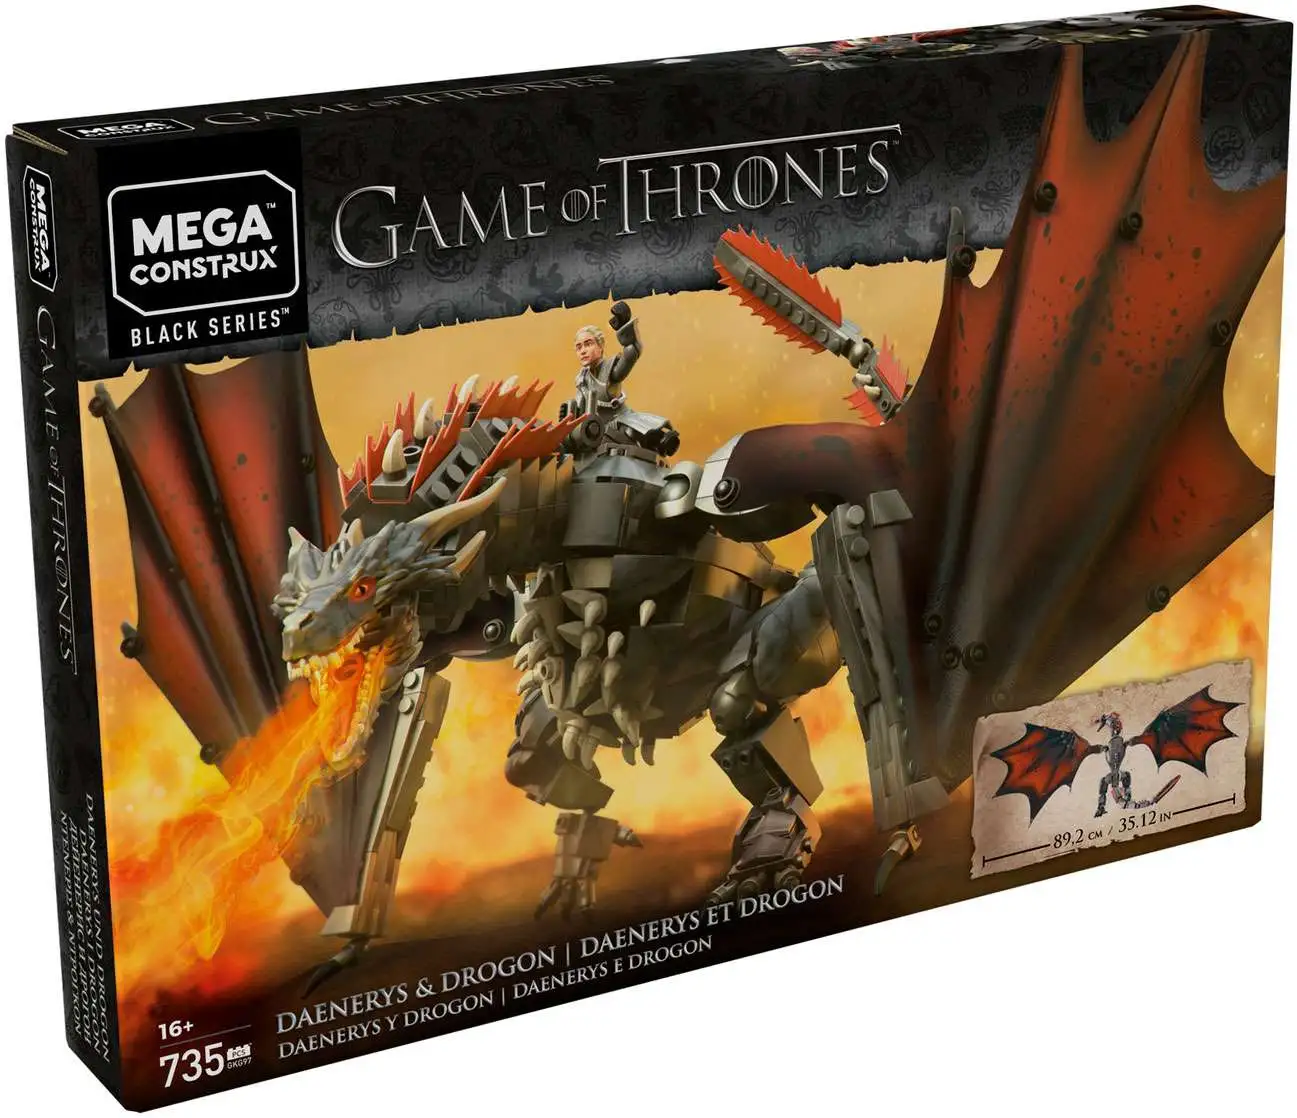 MEGA Game of Thrones Construx Daenerys and Drogon Set GKG97 for sale online 